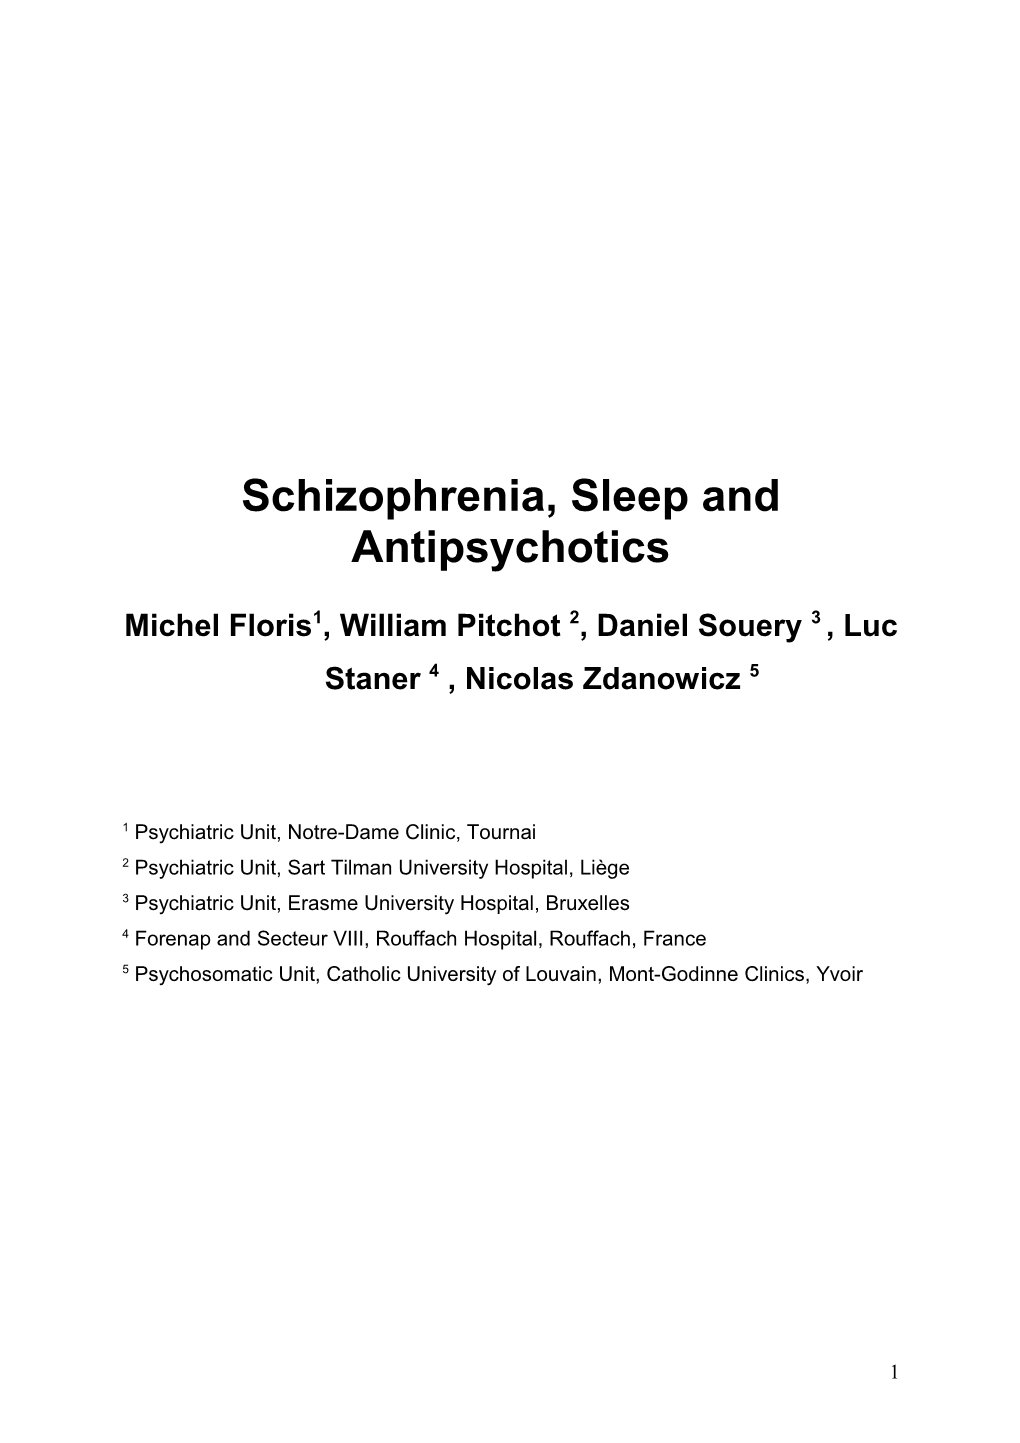 Schizophrenia, Sleep and Antipsychotics